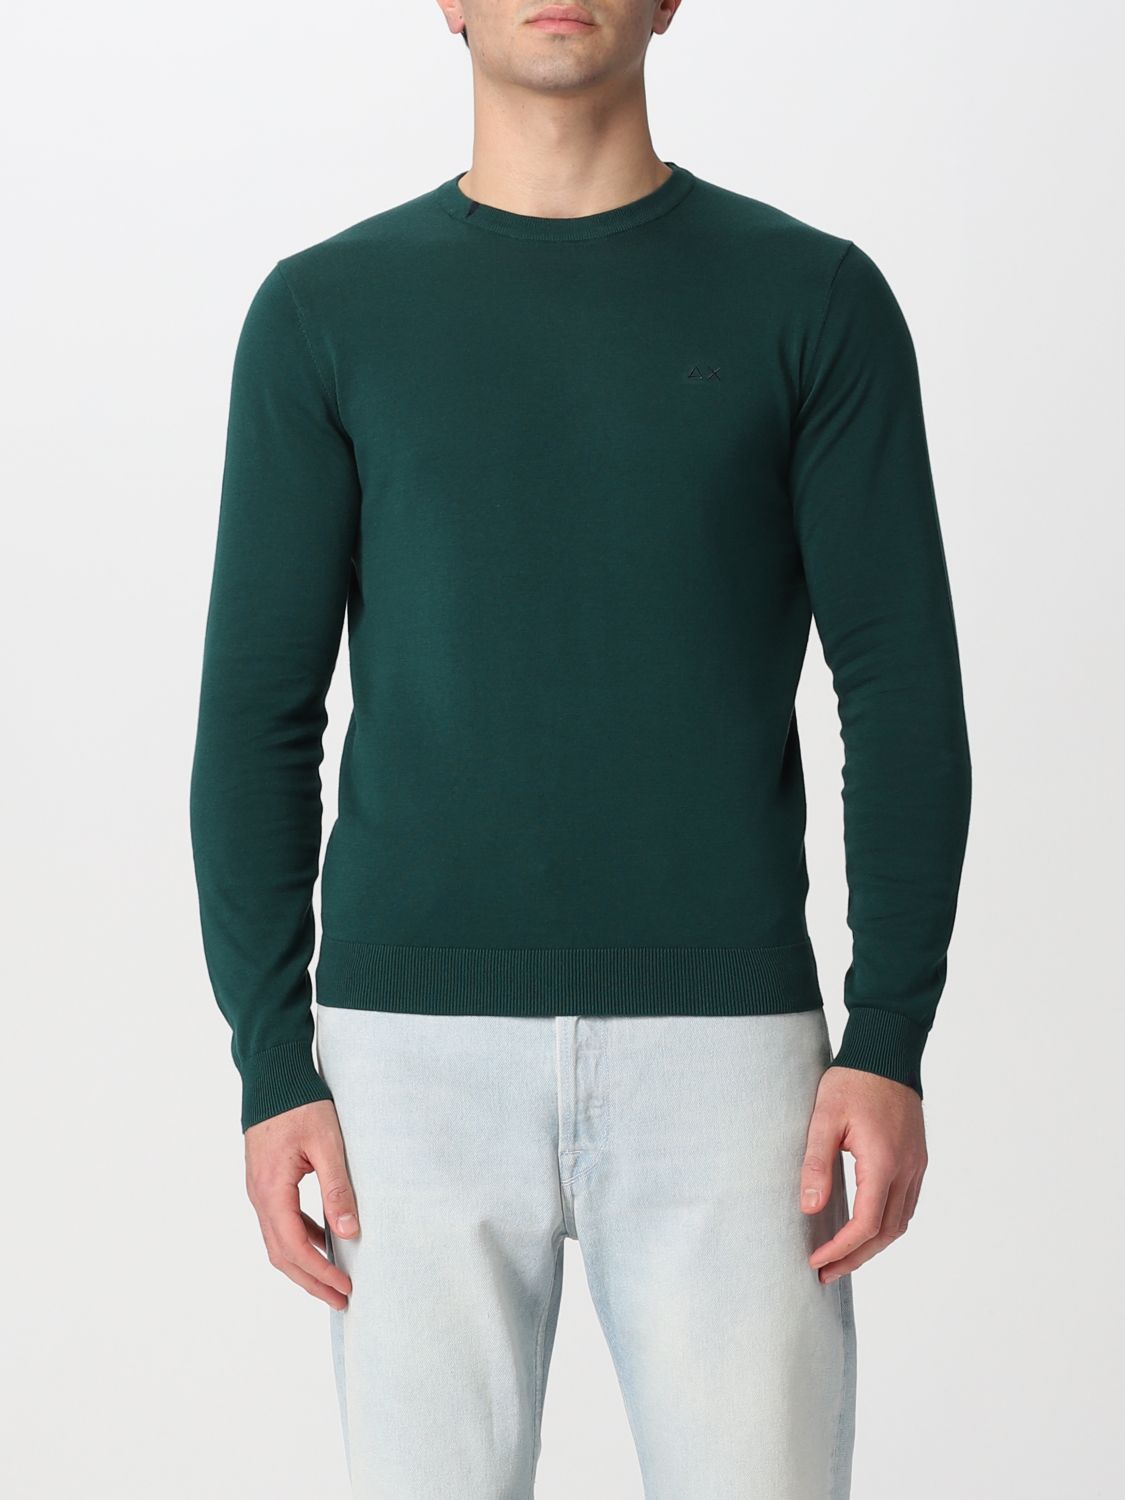 SUN 68: sweater for man - Green | Sun 68 sweater K32101 online on